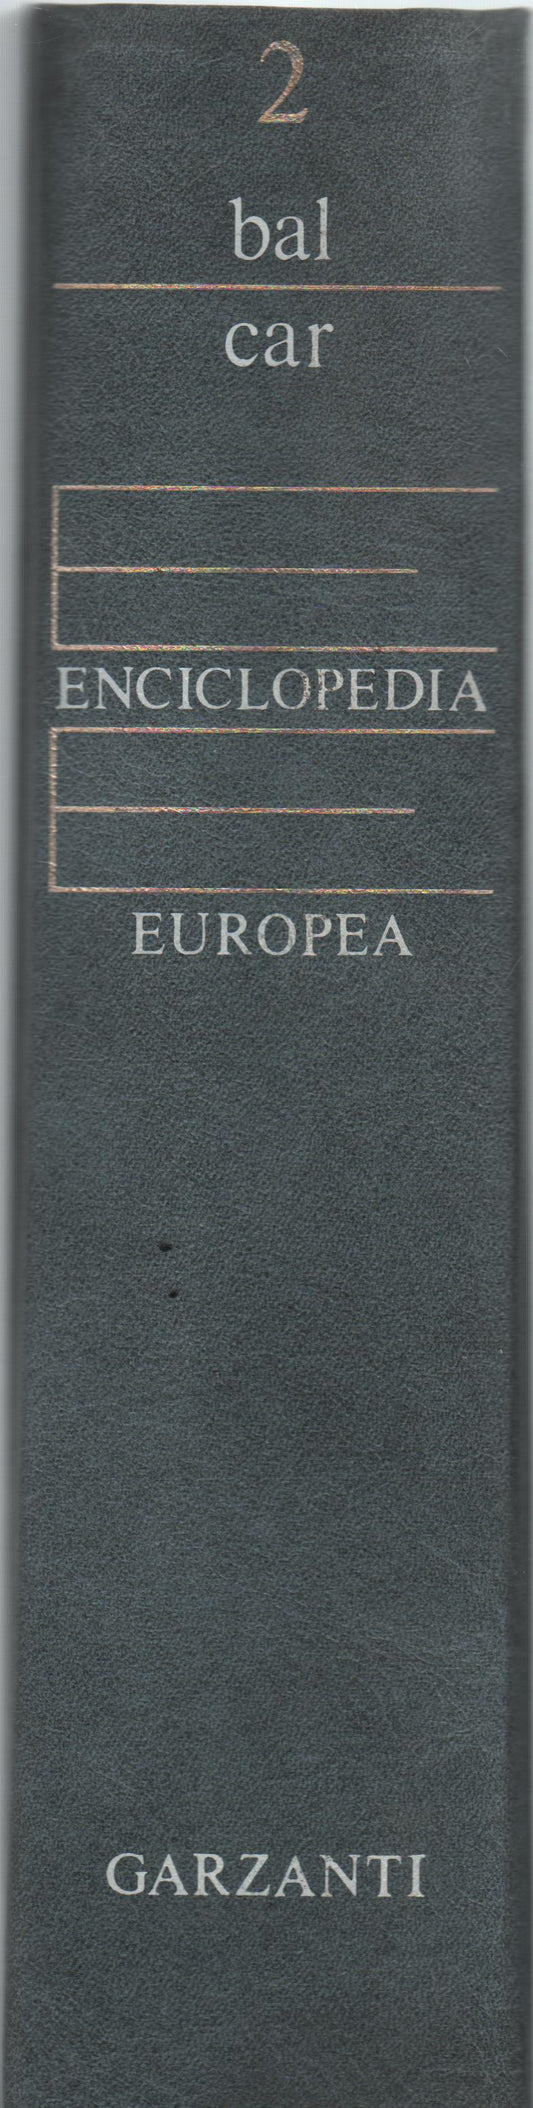 Enciclopedia Europea - Volume 2 (bal - car)